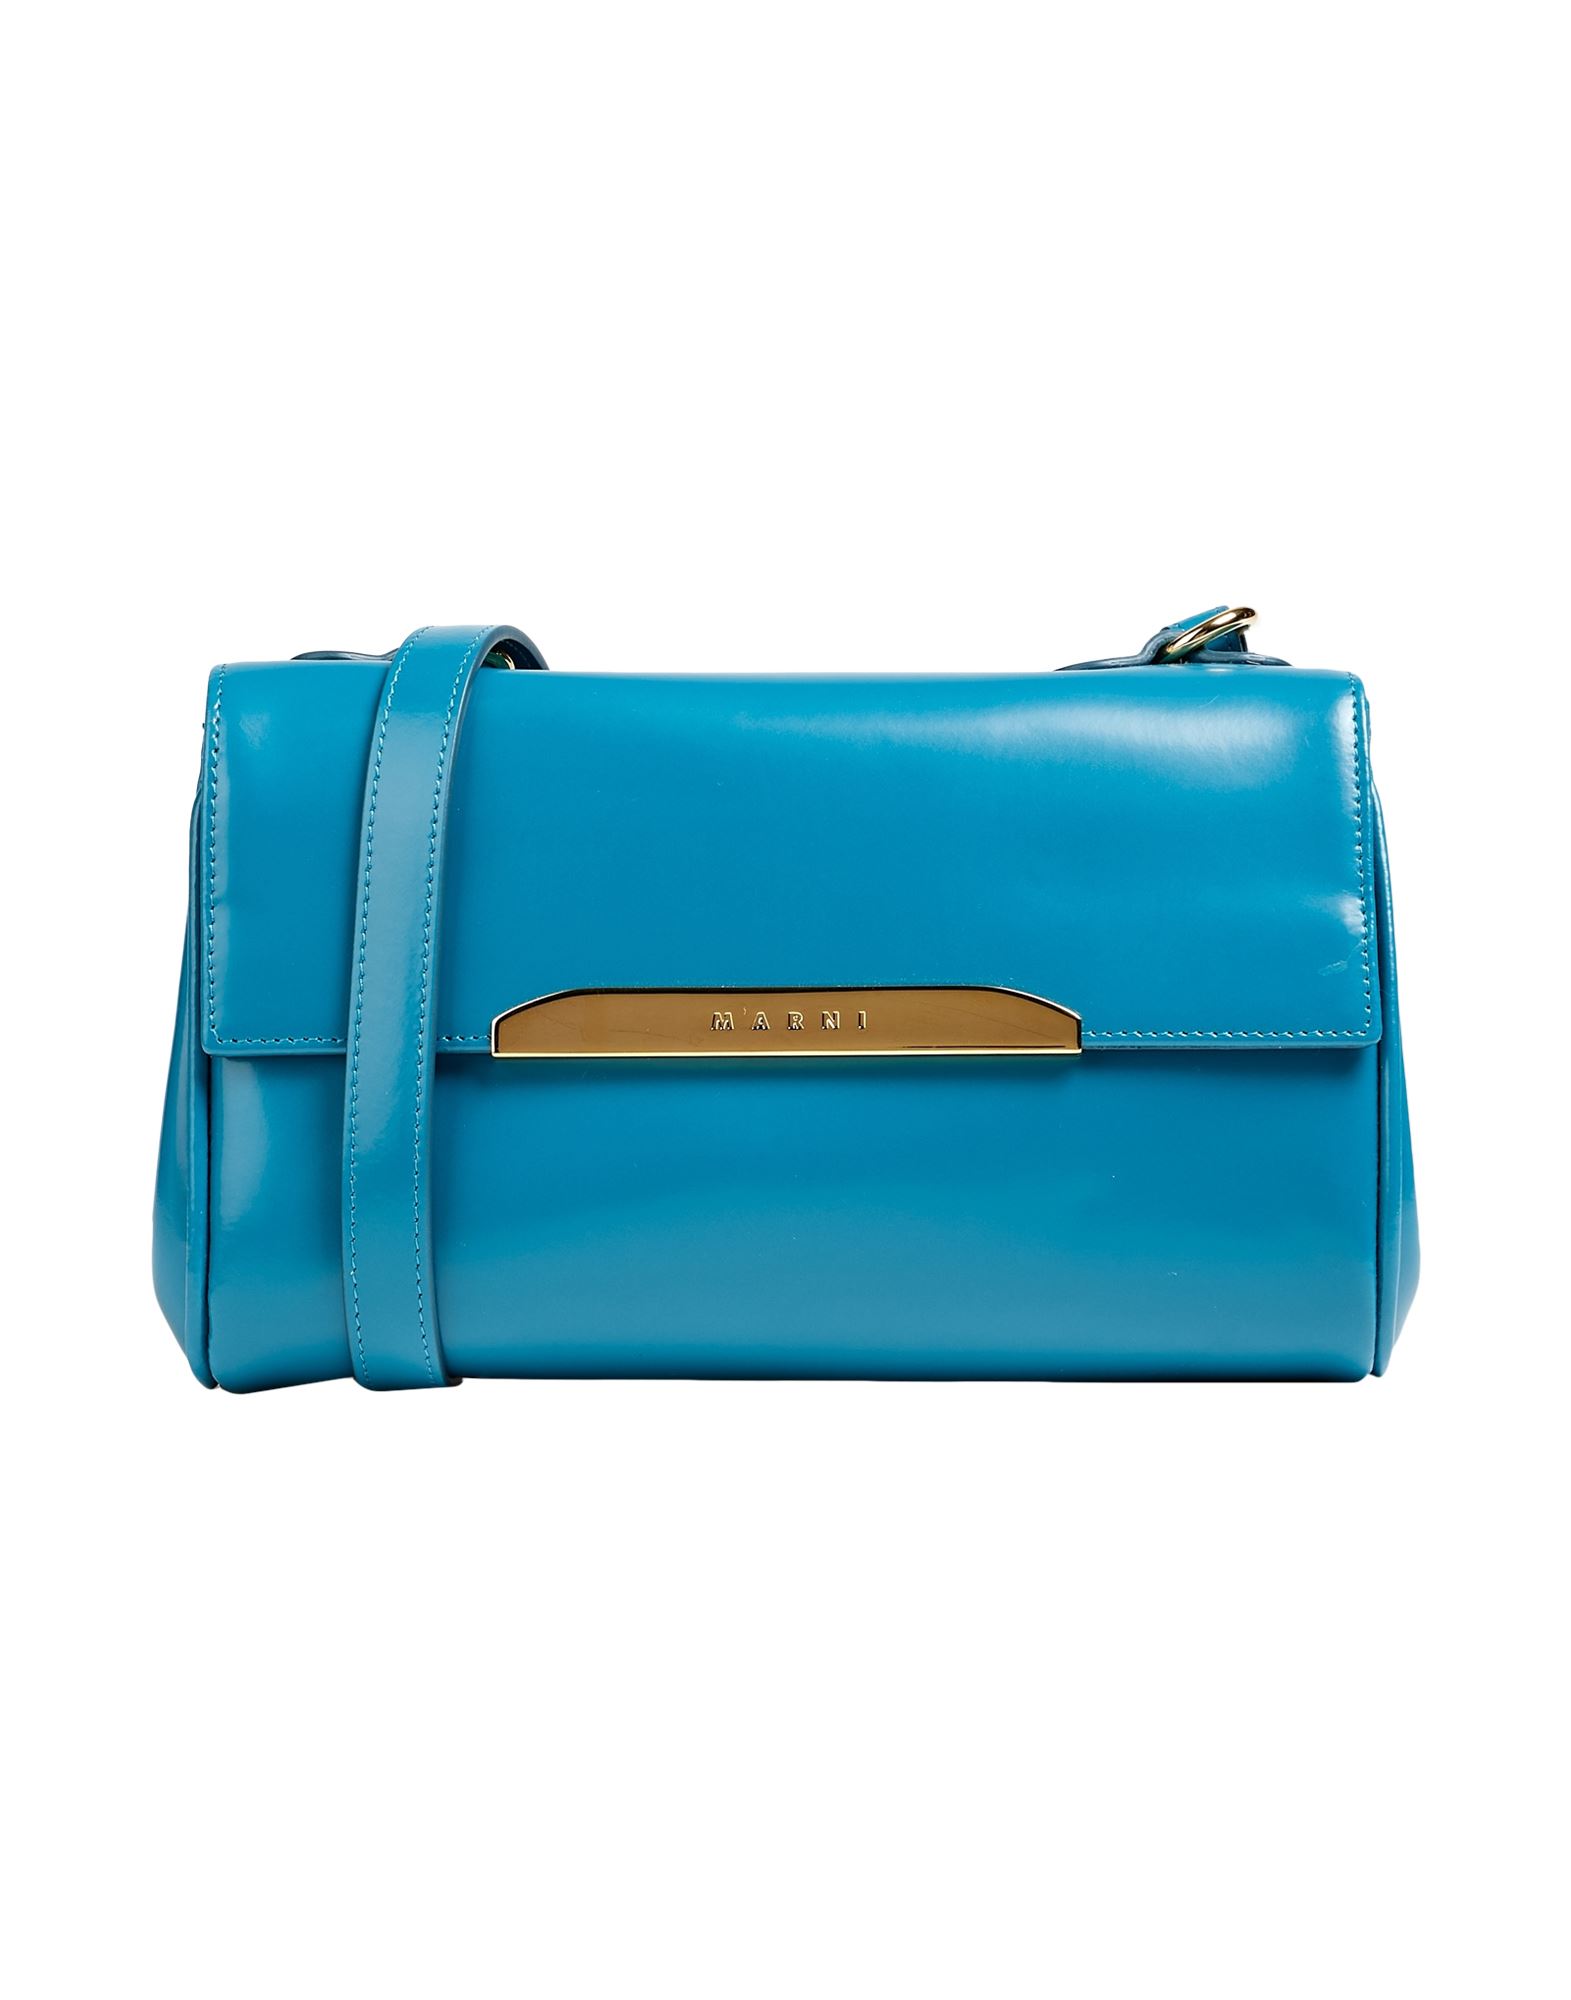 Marni Handbags In Turquoise